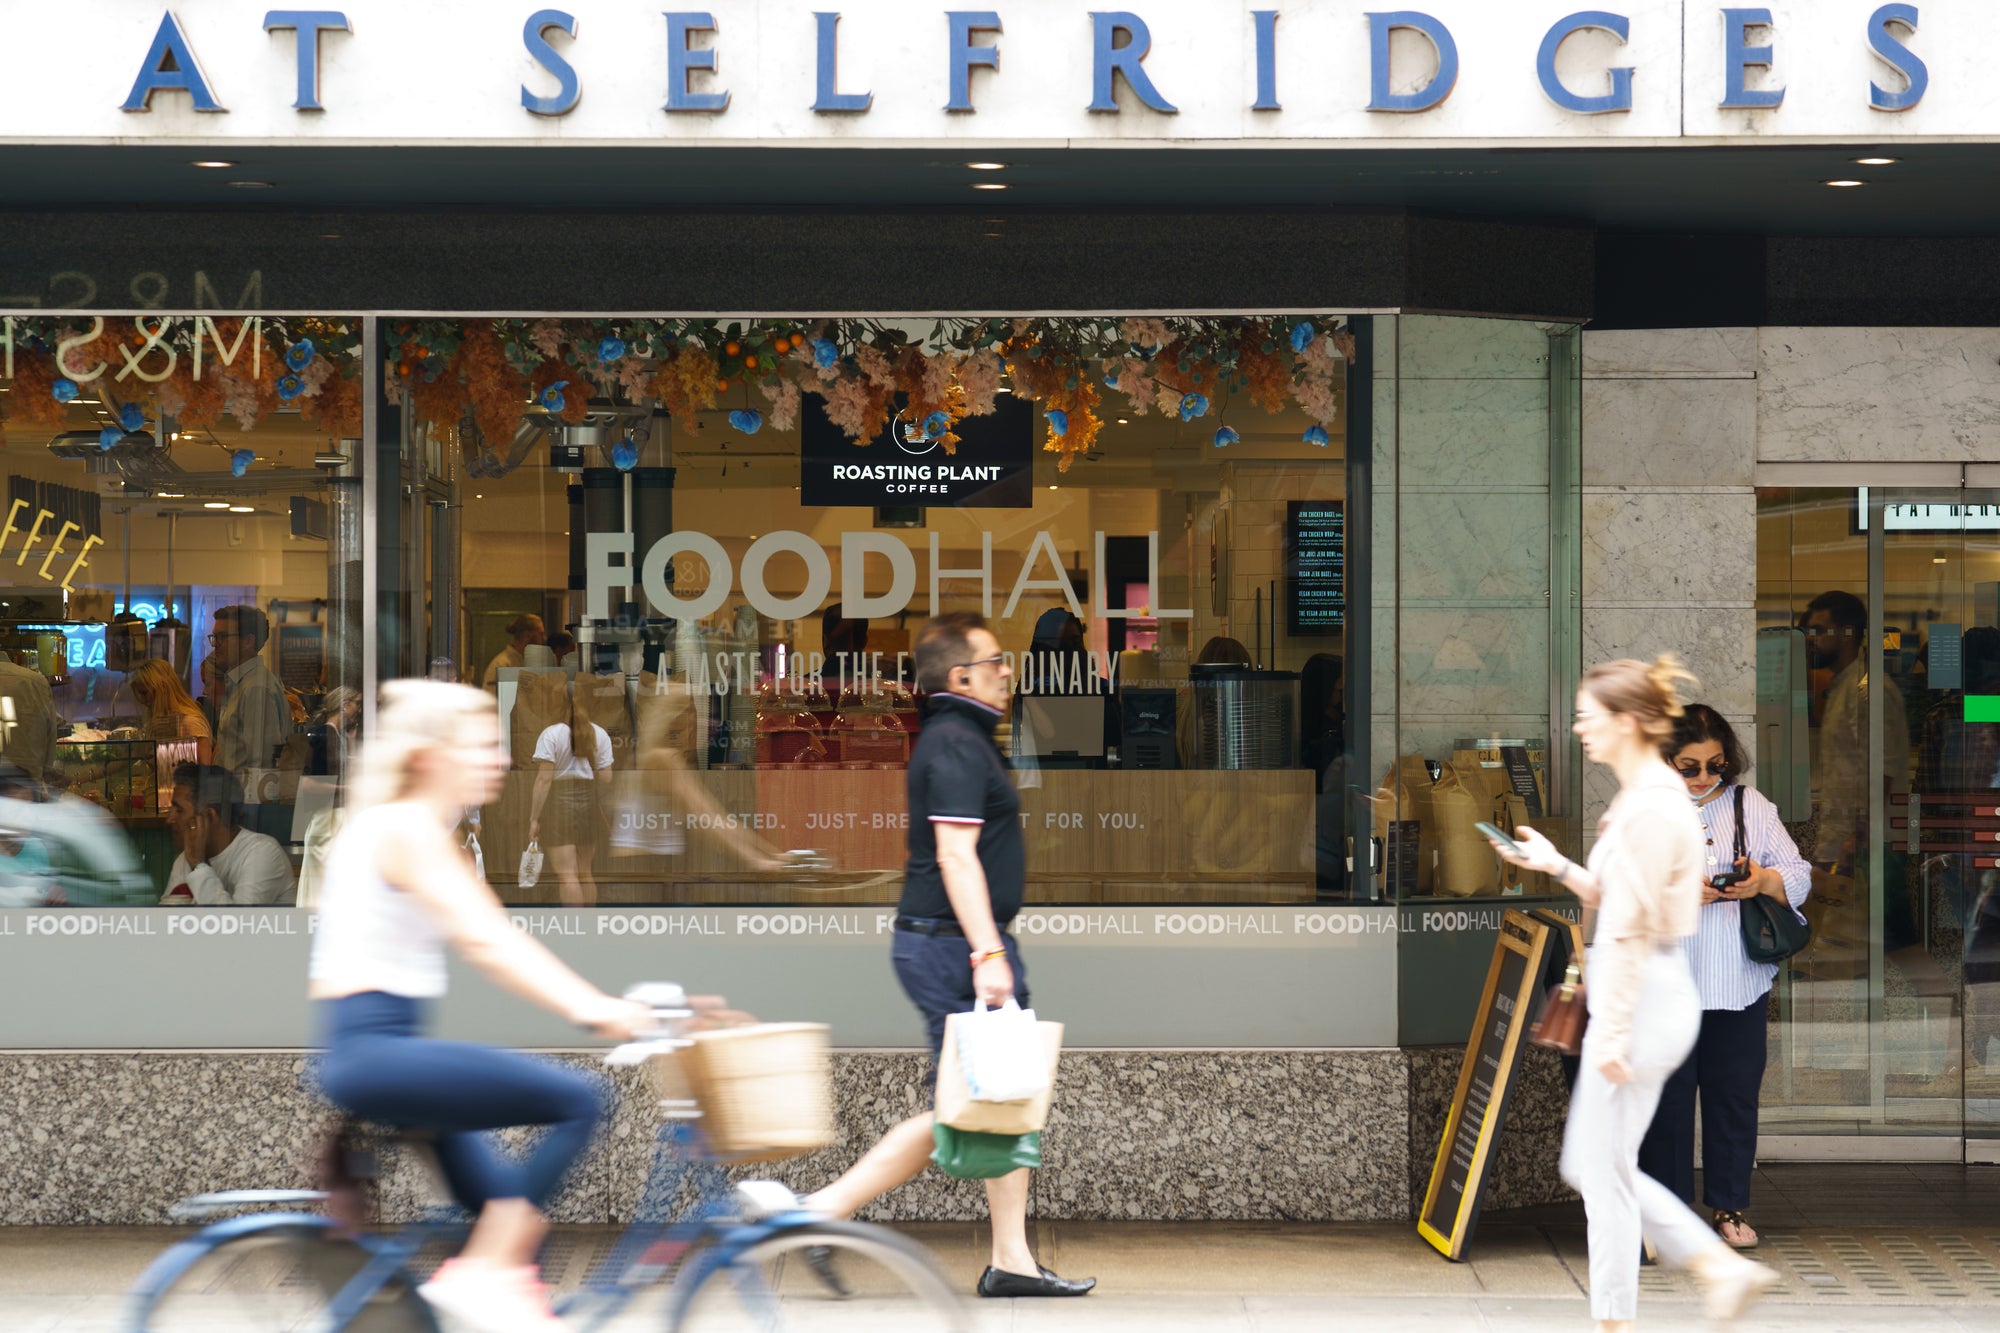 Photograph of Selfridges store location